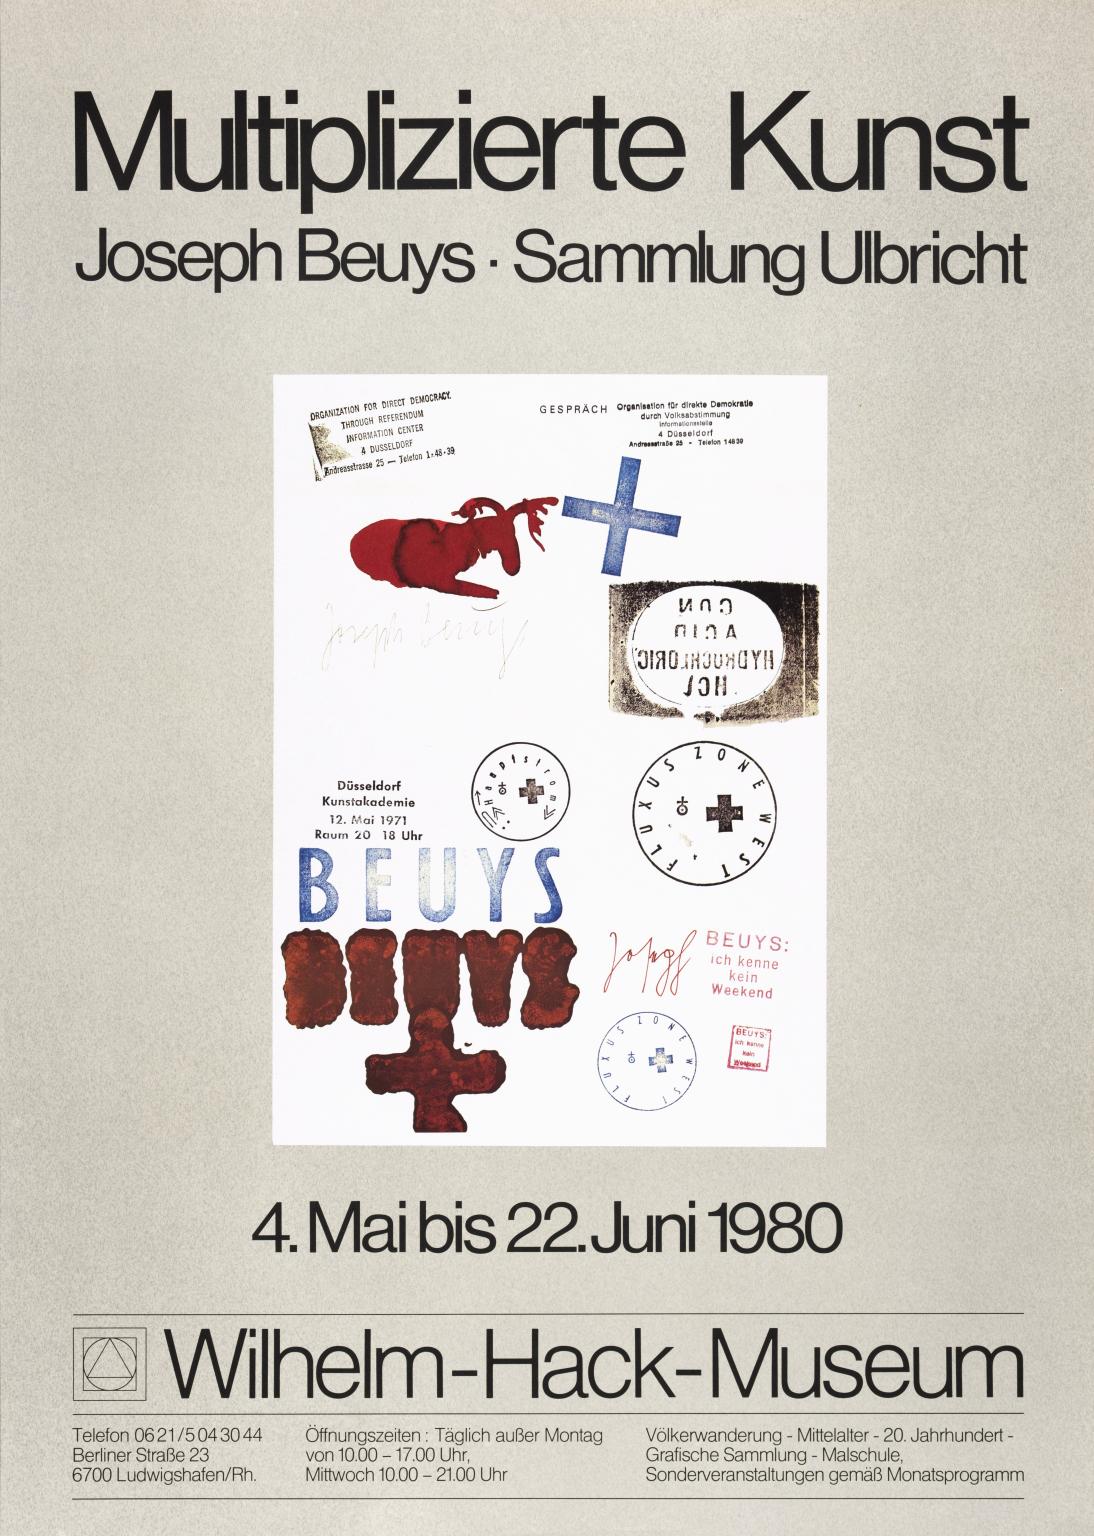 Joseph Beuys: Multiplizierte Kunst. Wilhelm-Hack-Museum. 1980